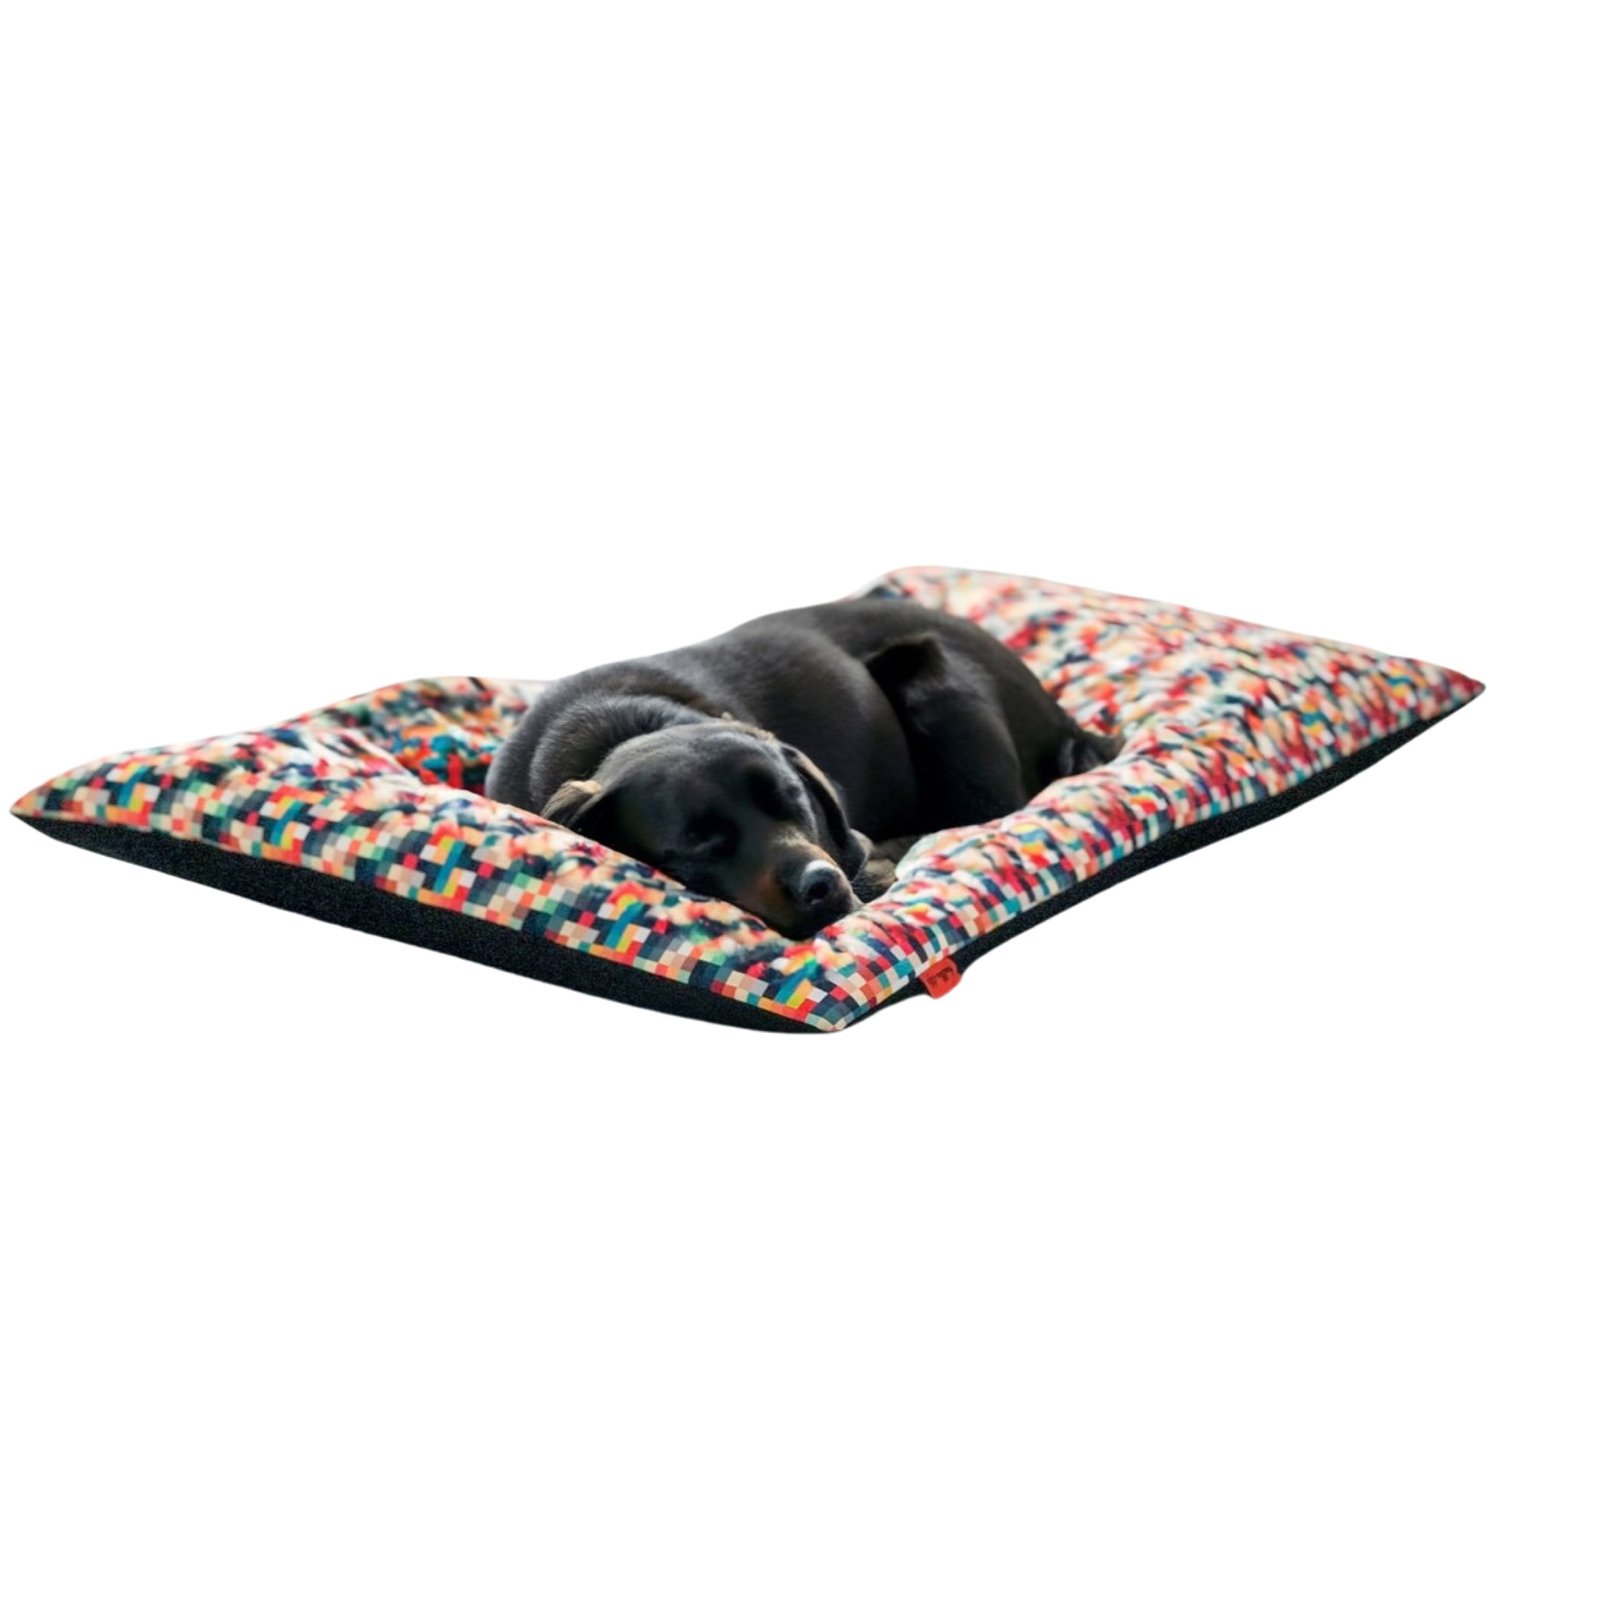 flat-sleeping-dog-bed-supplier